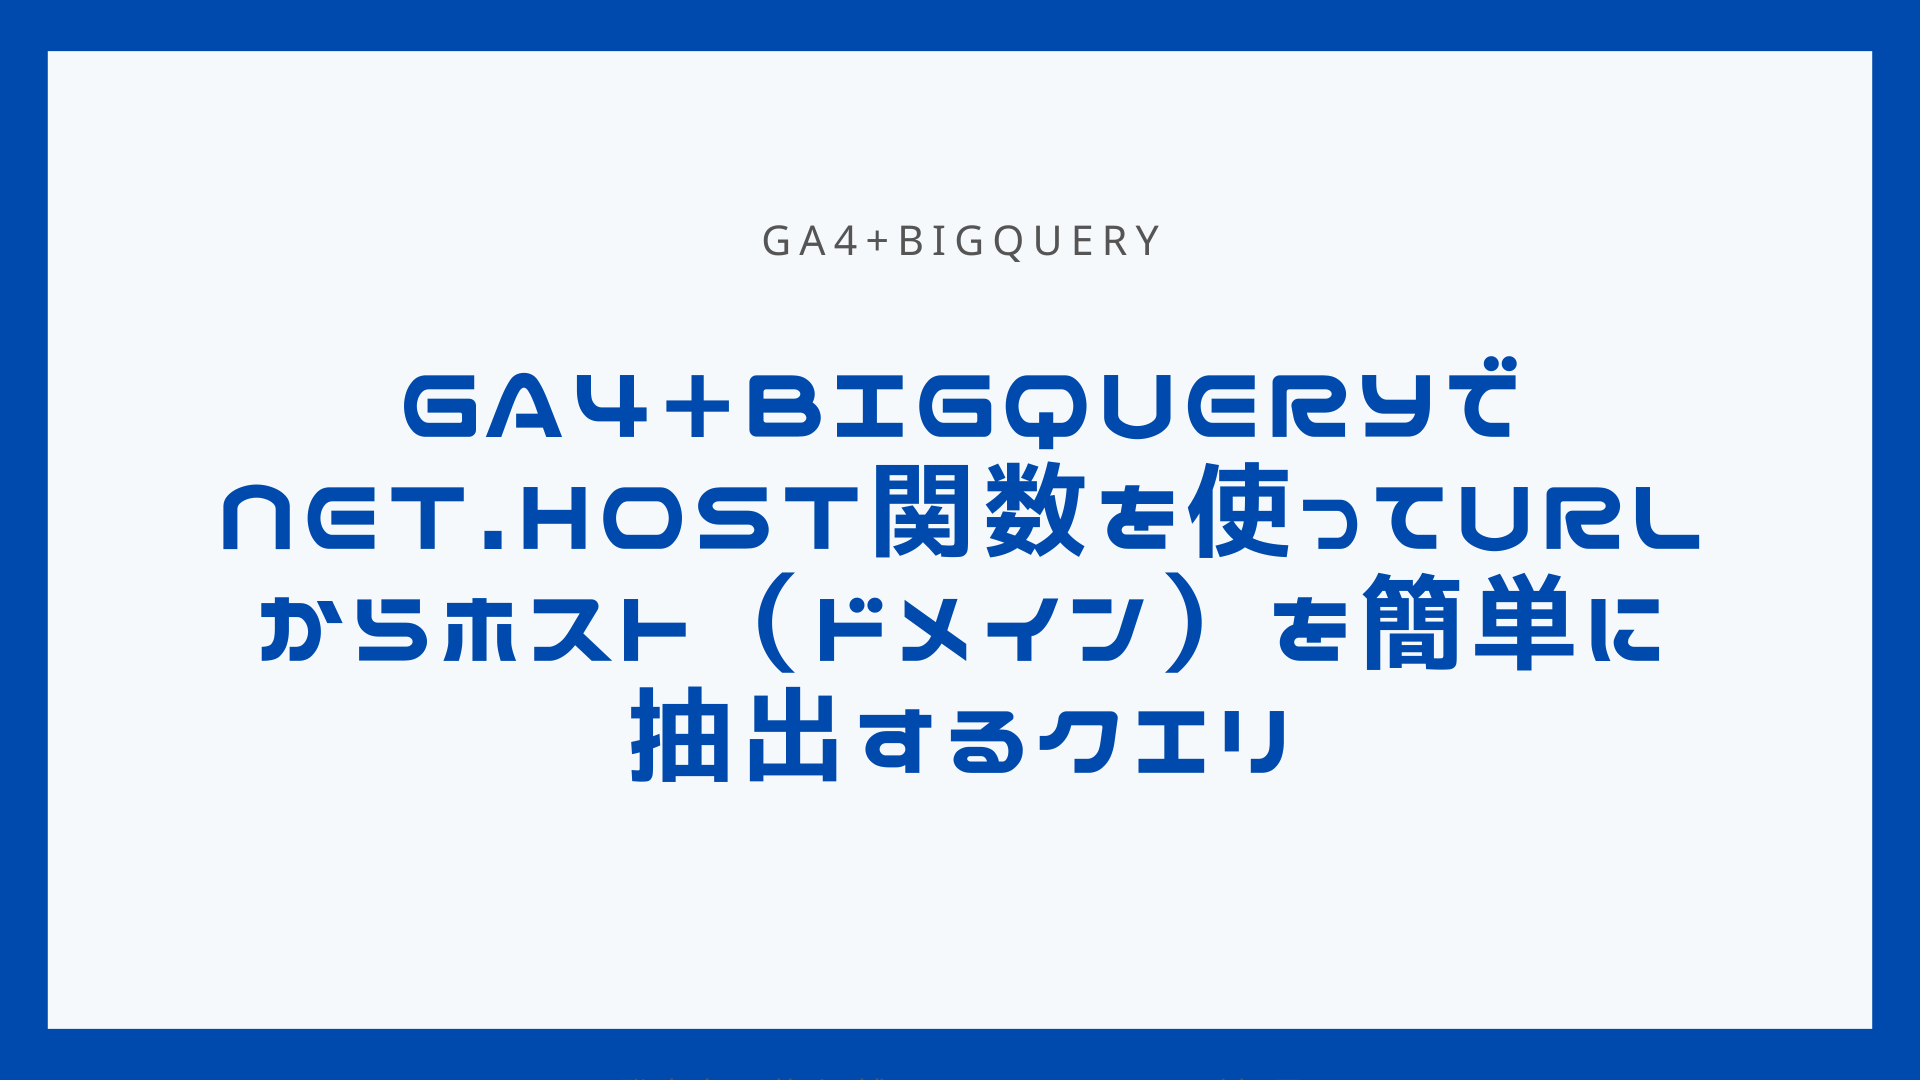 GA4+BigQueryでNET.HOST関数を使ってURLからホスト（ドメイン）を簡単に抽出するクエリ